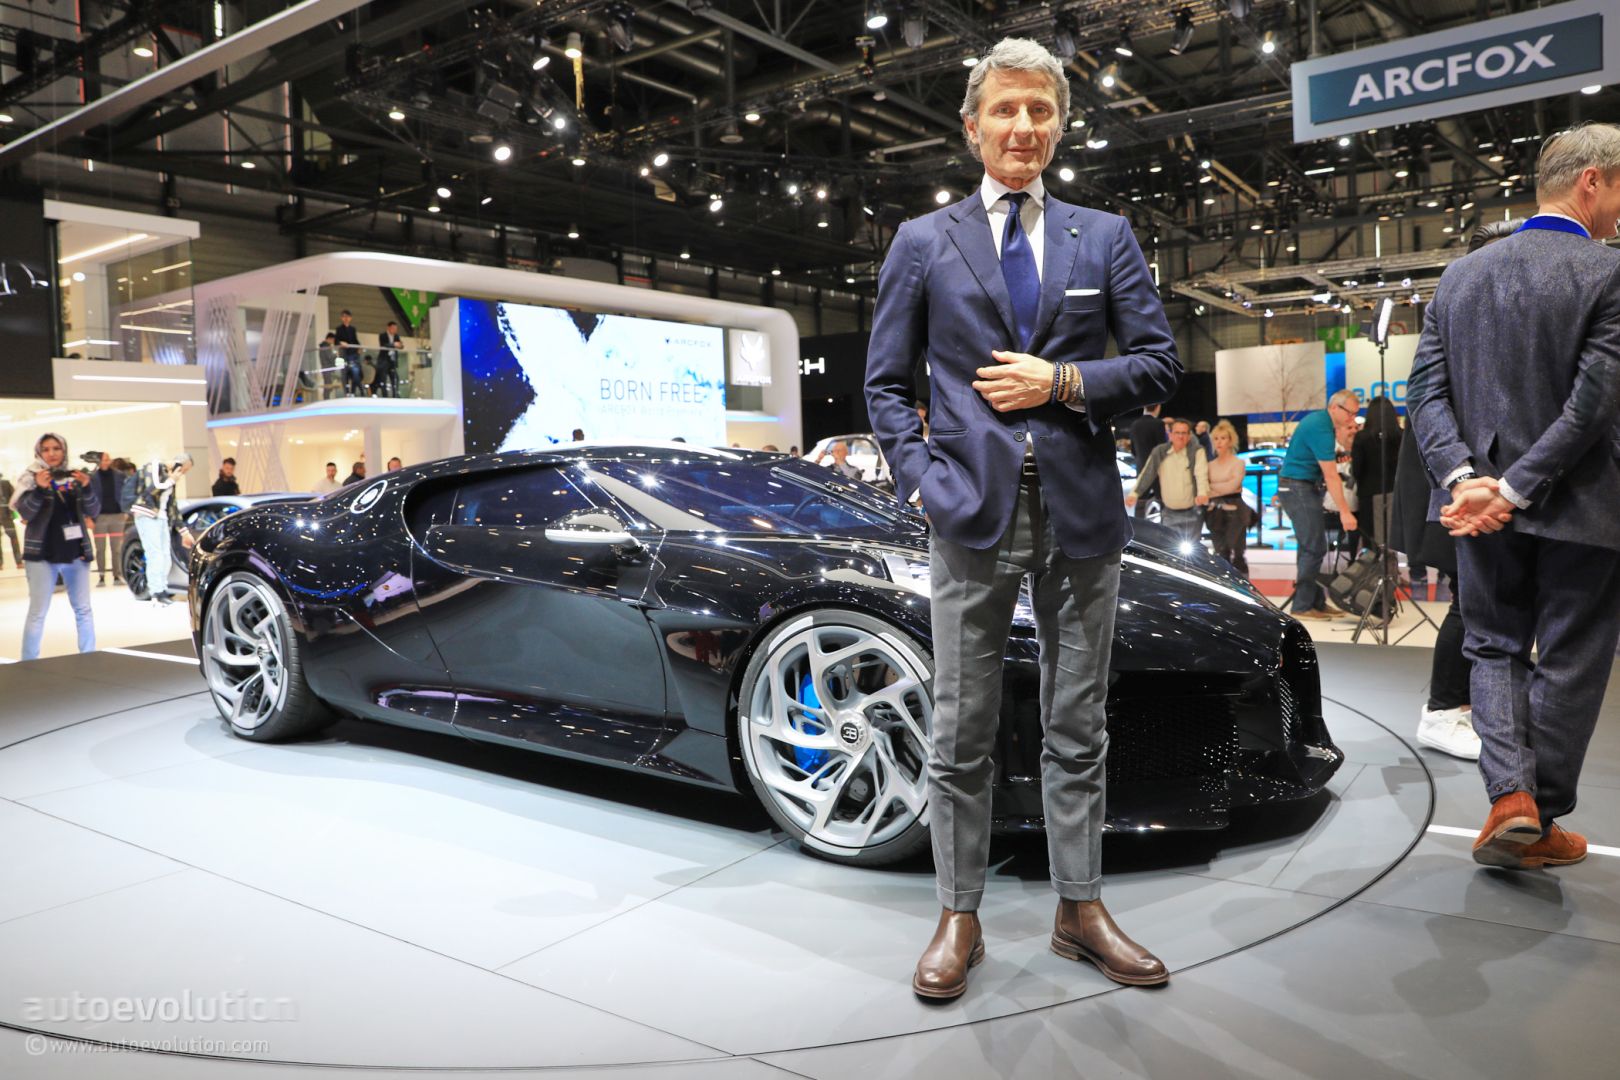 UPDATE: $19M Bugatti La Voiture Noire Geneva Car Is a Mockup ...